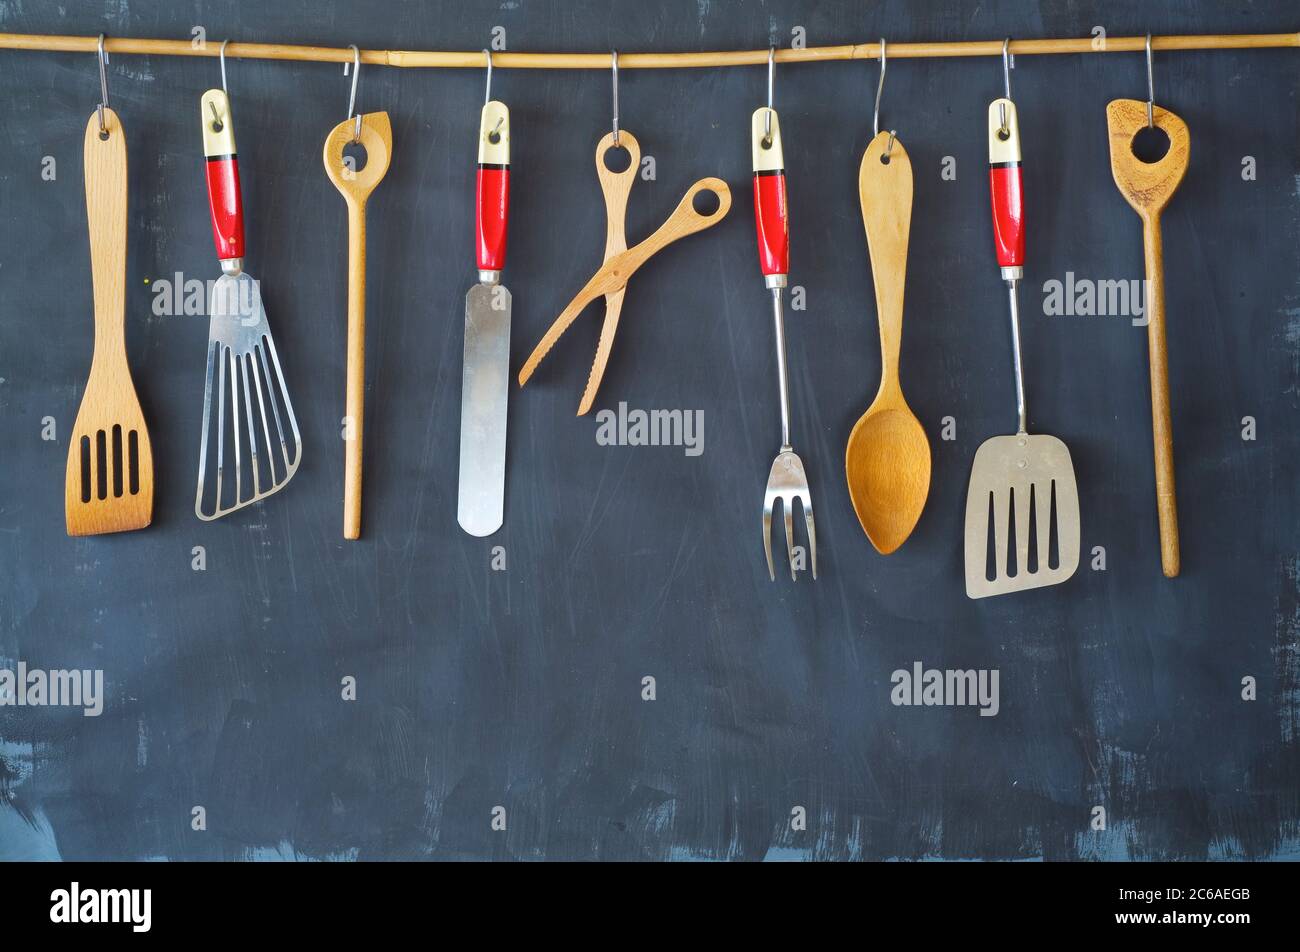 Kitchen utensils, for commercial kitchen, restaurant ,cooking, kitchen concept. Stock Photo